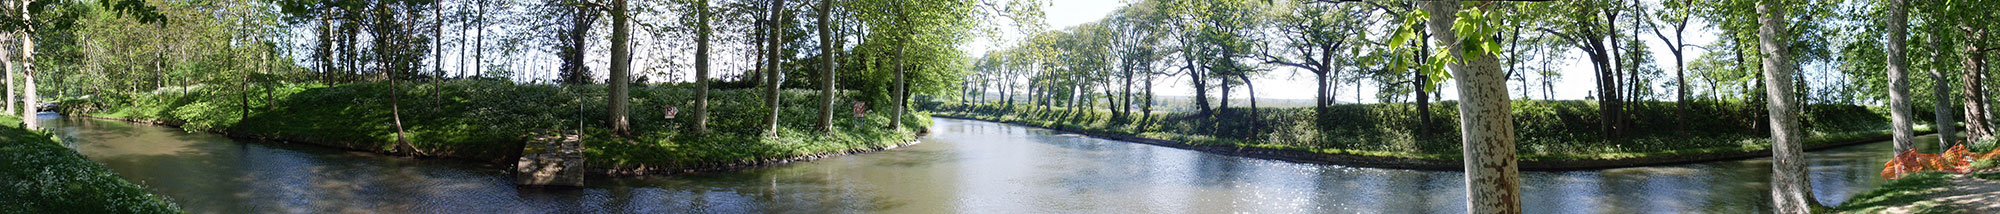 Revel, Haute-Garonne - Wikipedia